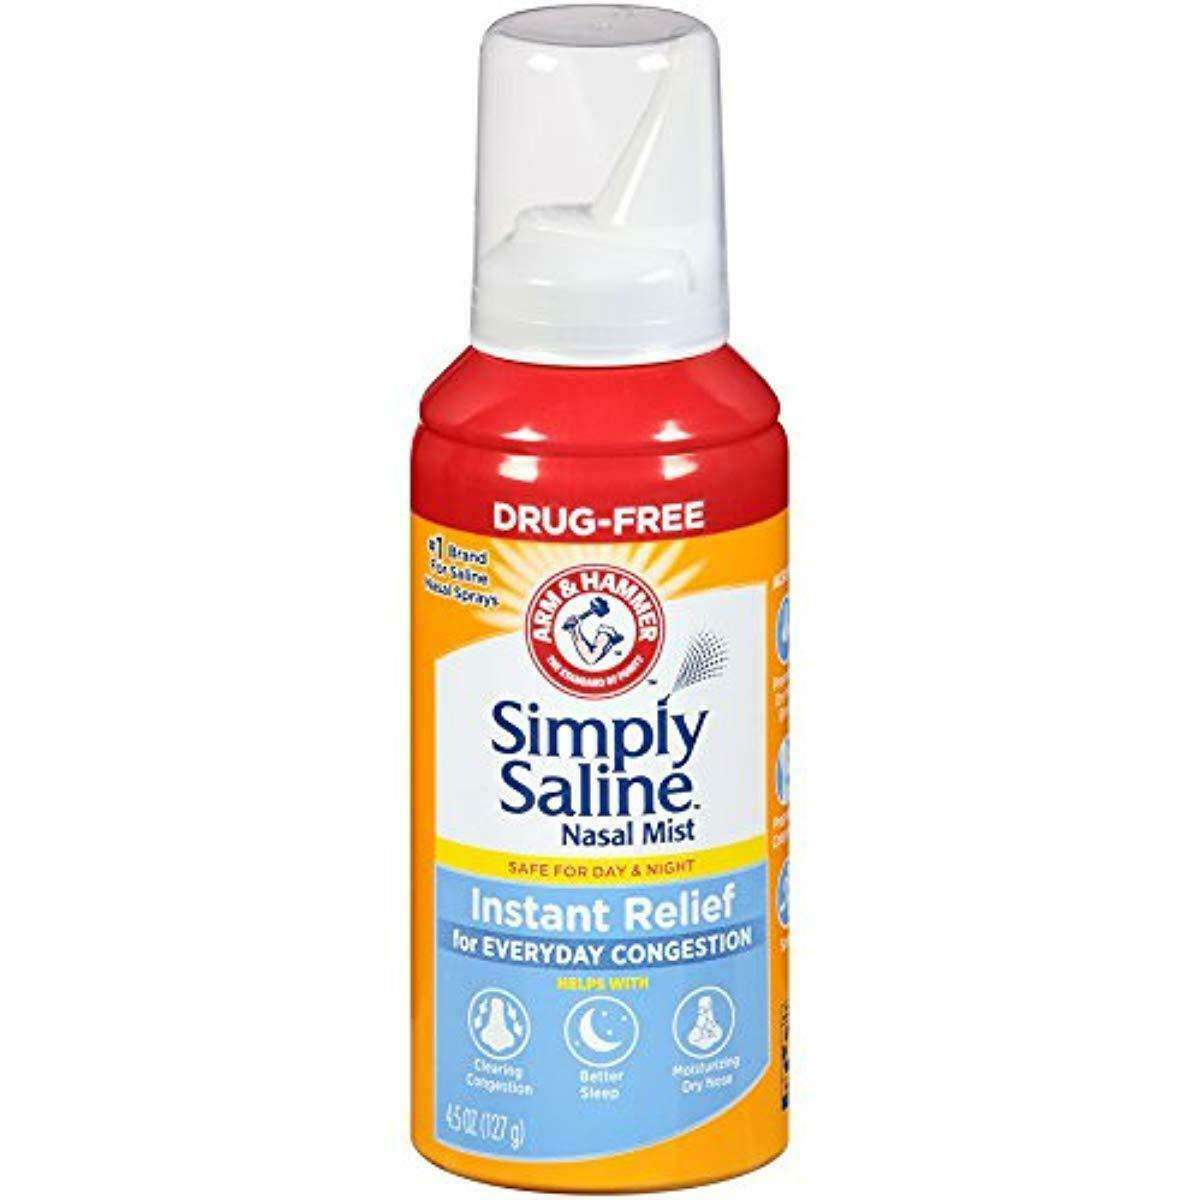 Simply Saline Adult Nasal Spray Mist, Original, Giant Size, 4.5 Oz ...